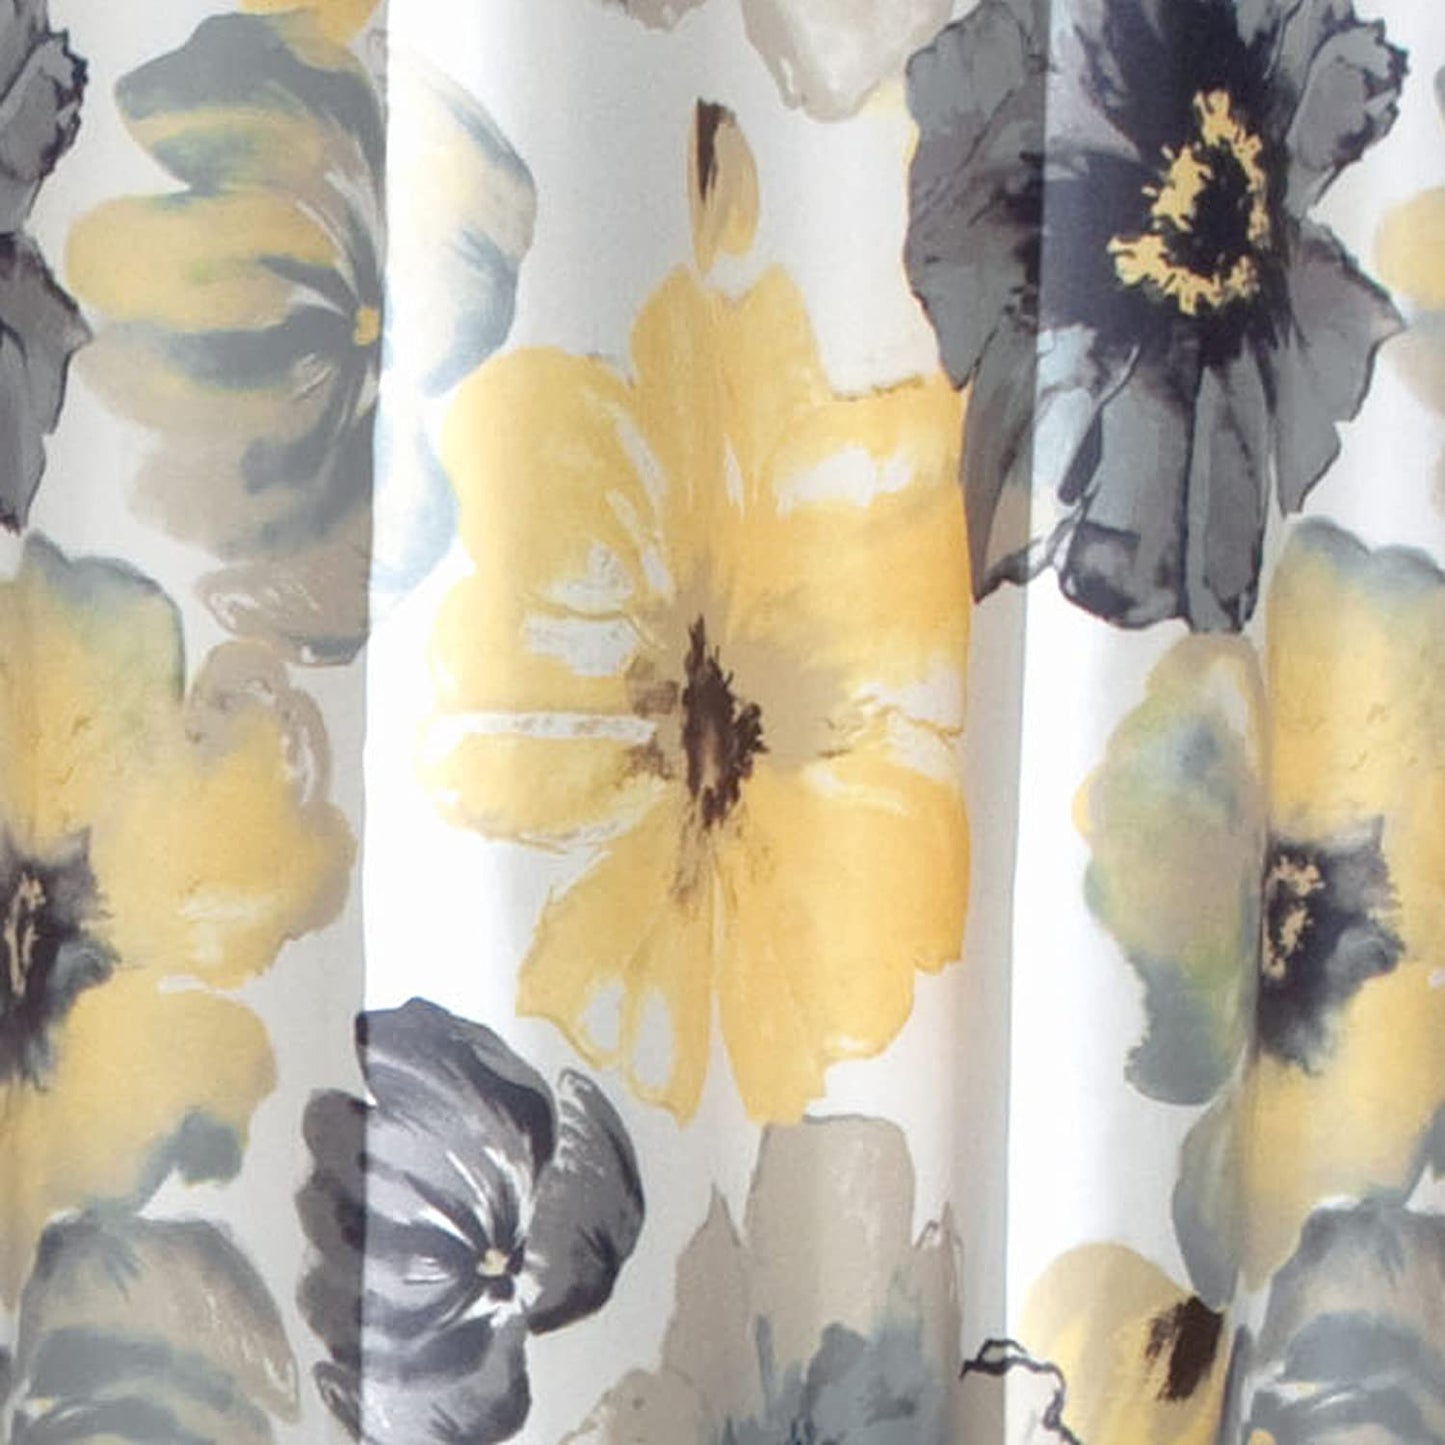 Wongs Bedding Bathroom Flower Floral Large Blooms Fabric Print Design Shower Curtain